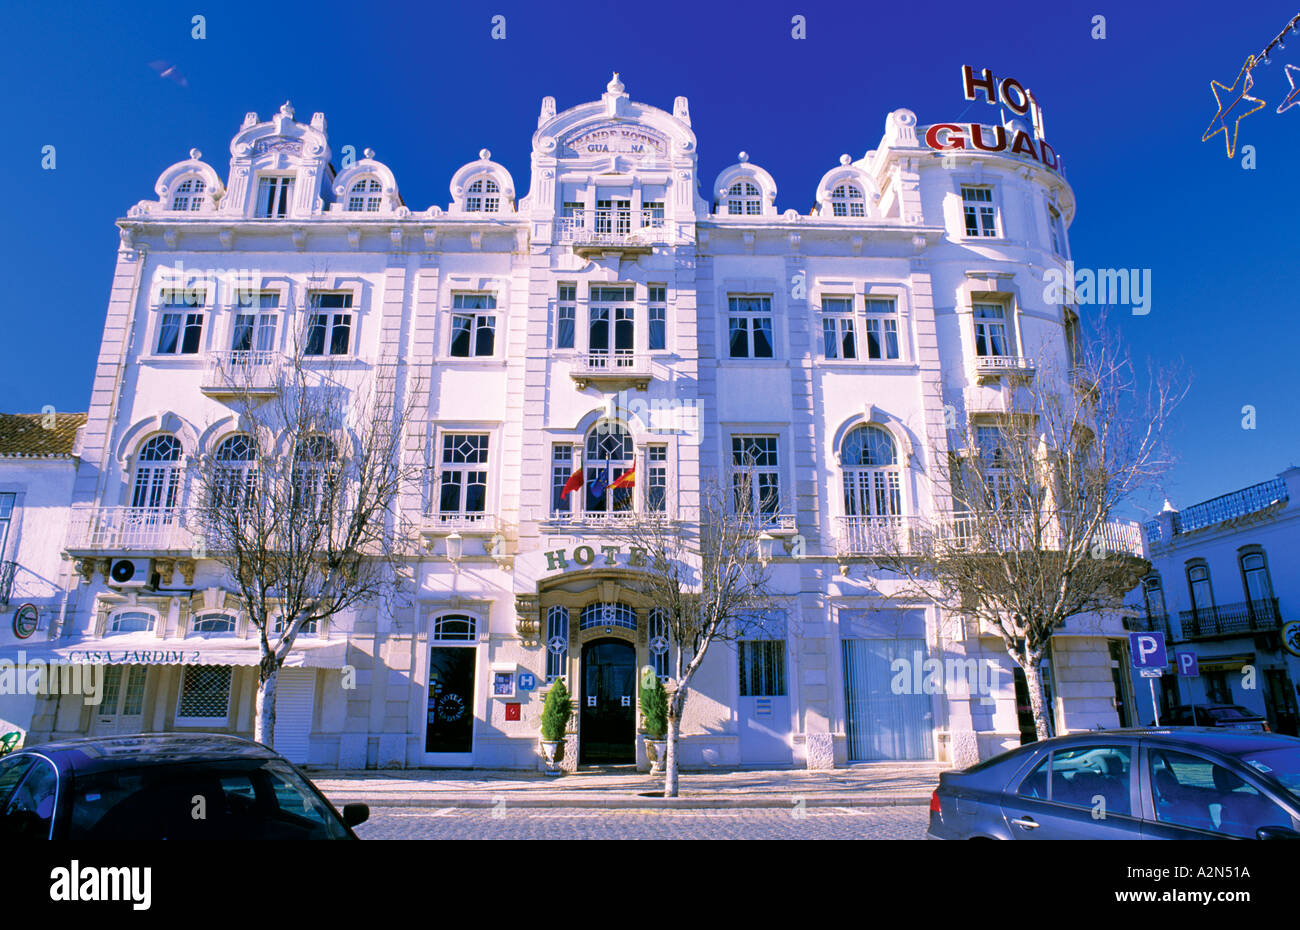 hotel vila real portugal